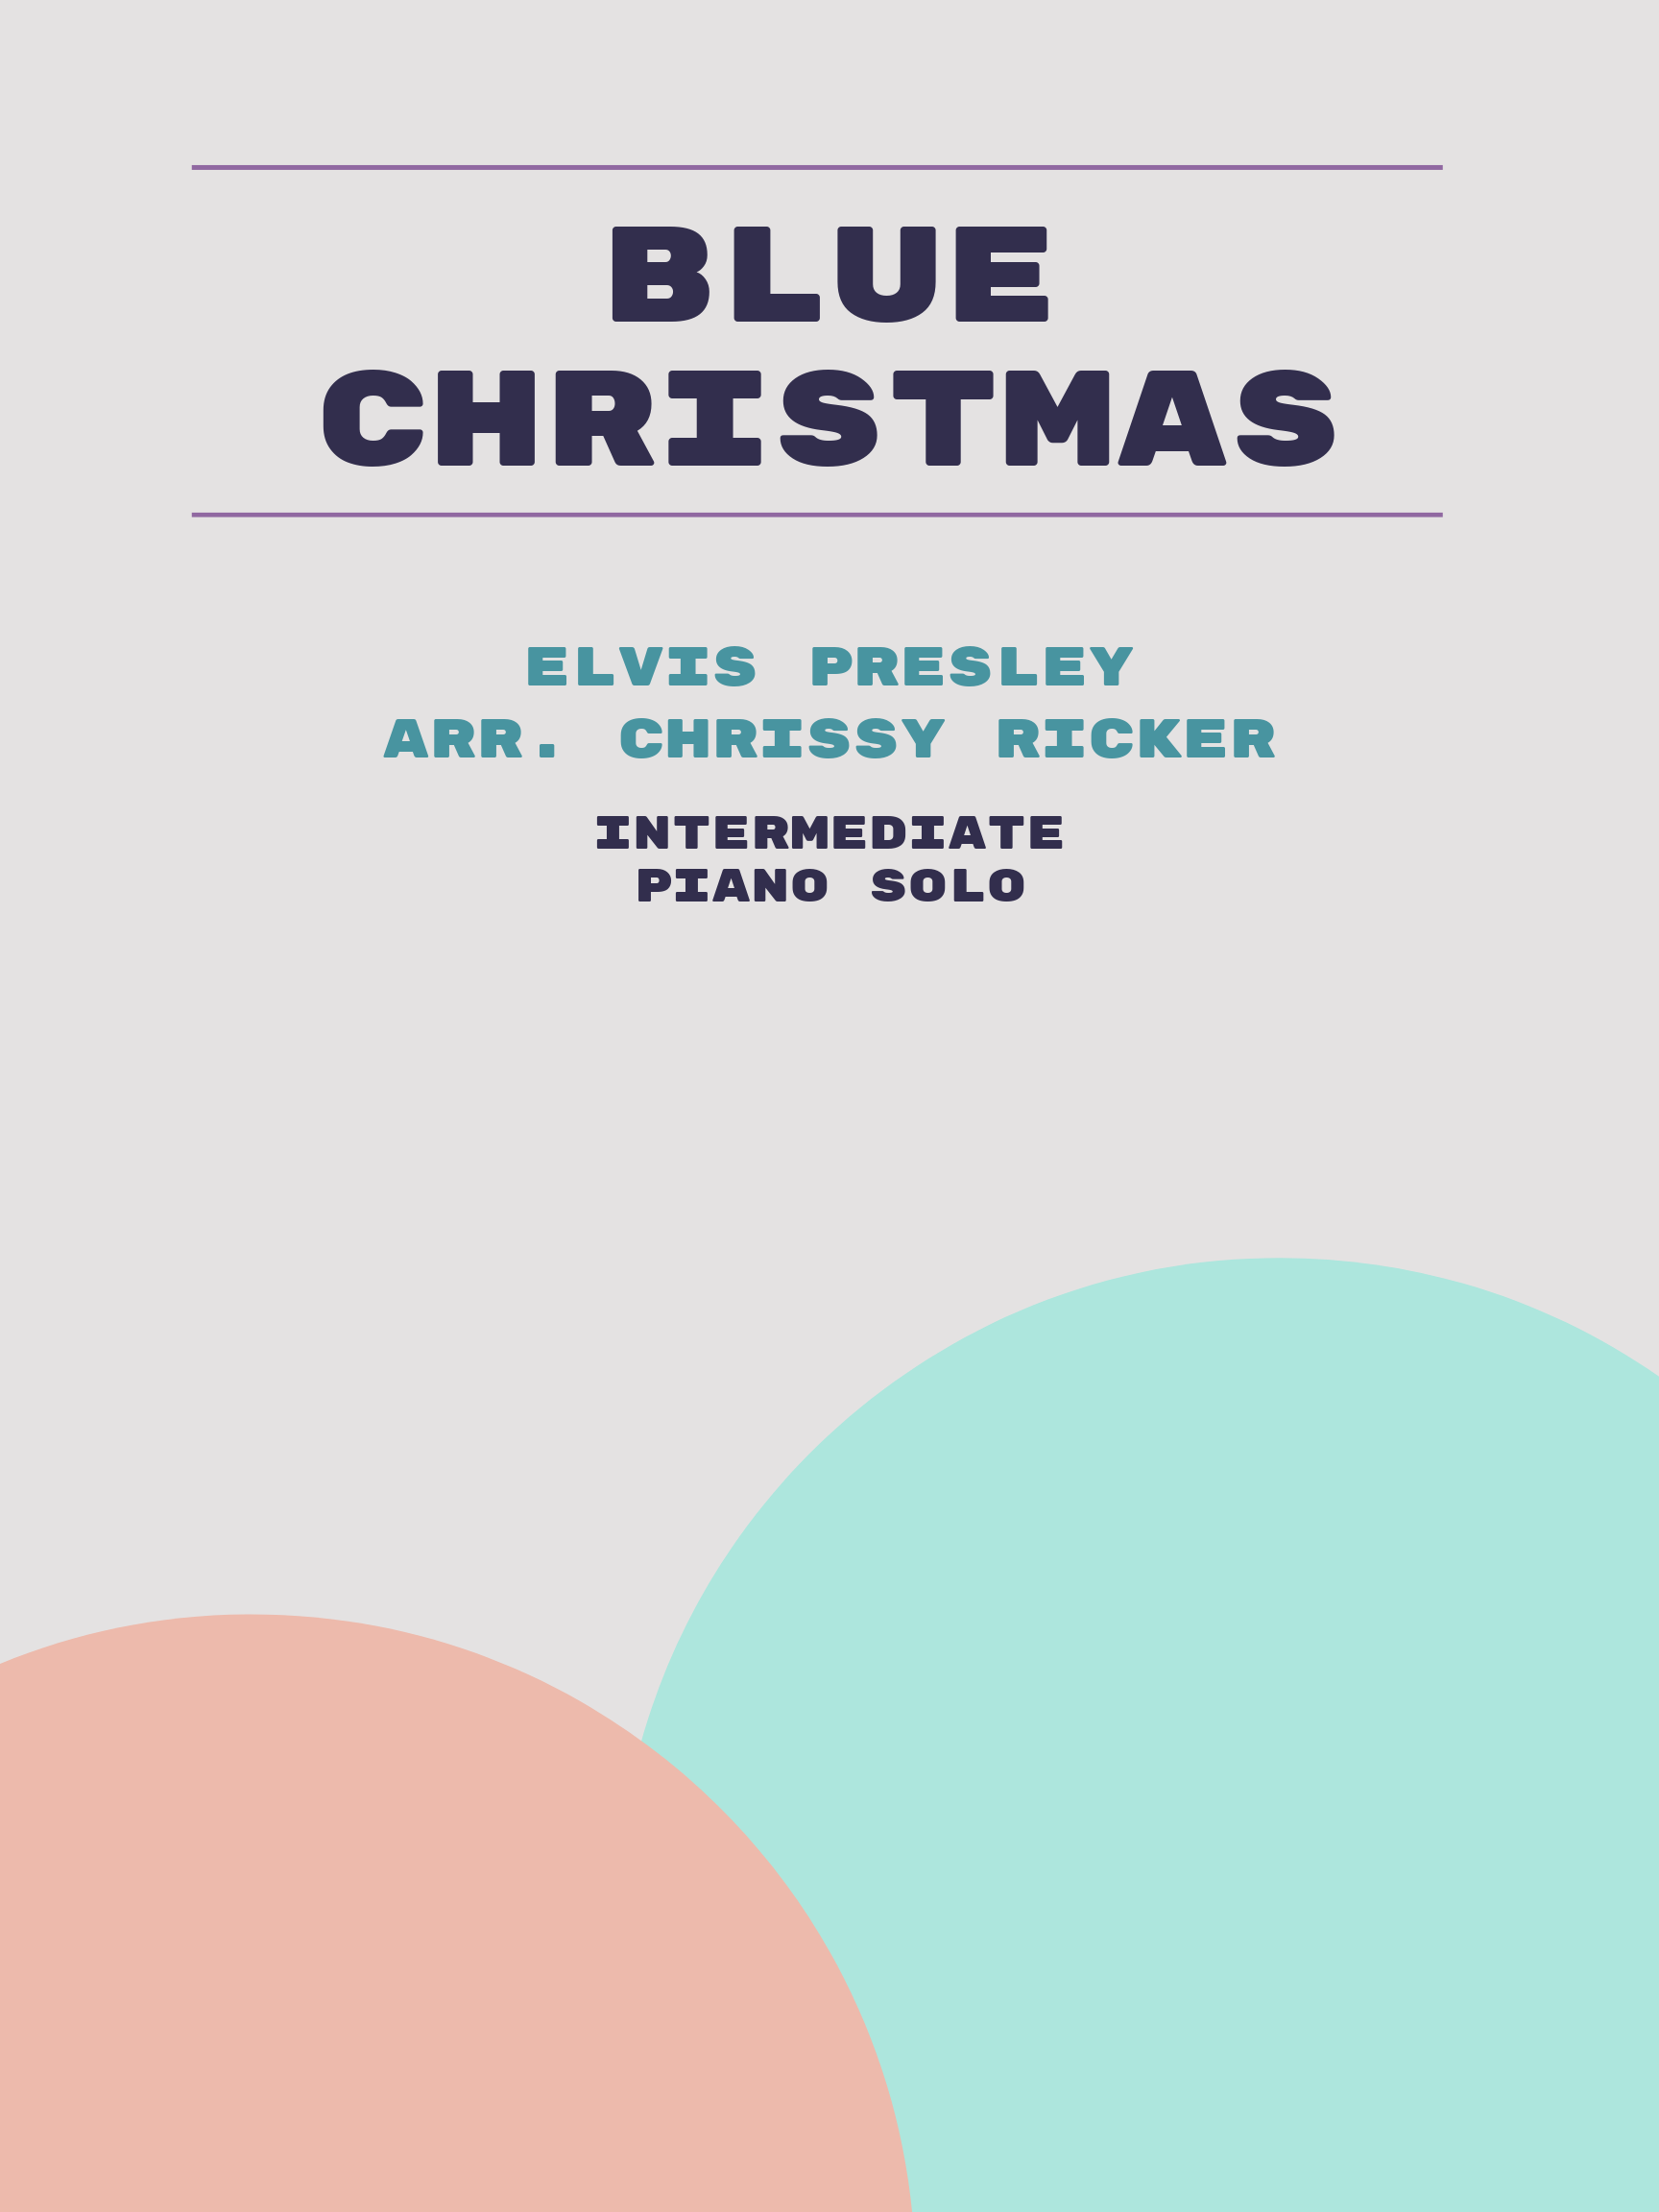 Blue Christmas by Elvis Presley